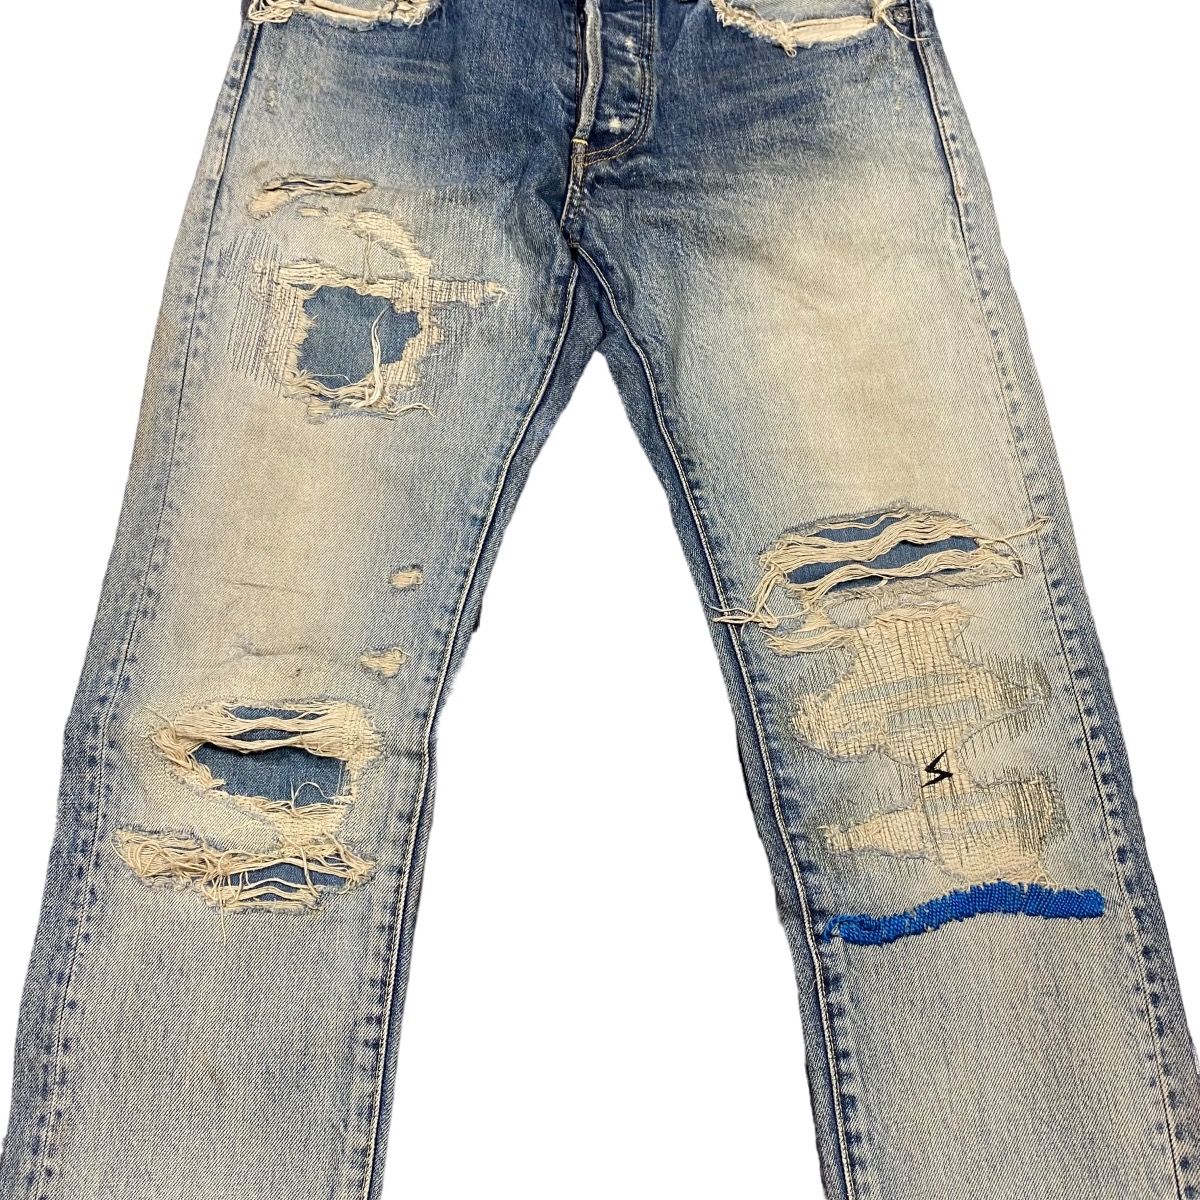 ❗️❗️❗️Rare Item Undercover 68 Blue Yarn Jeans - 2